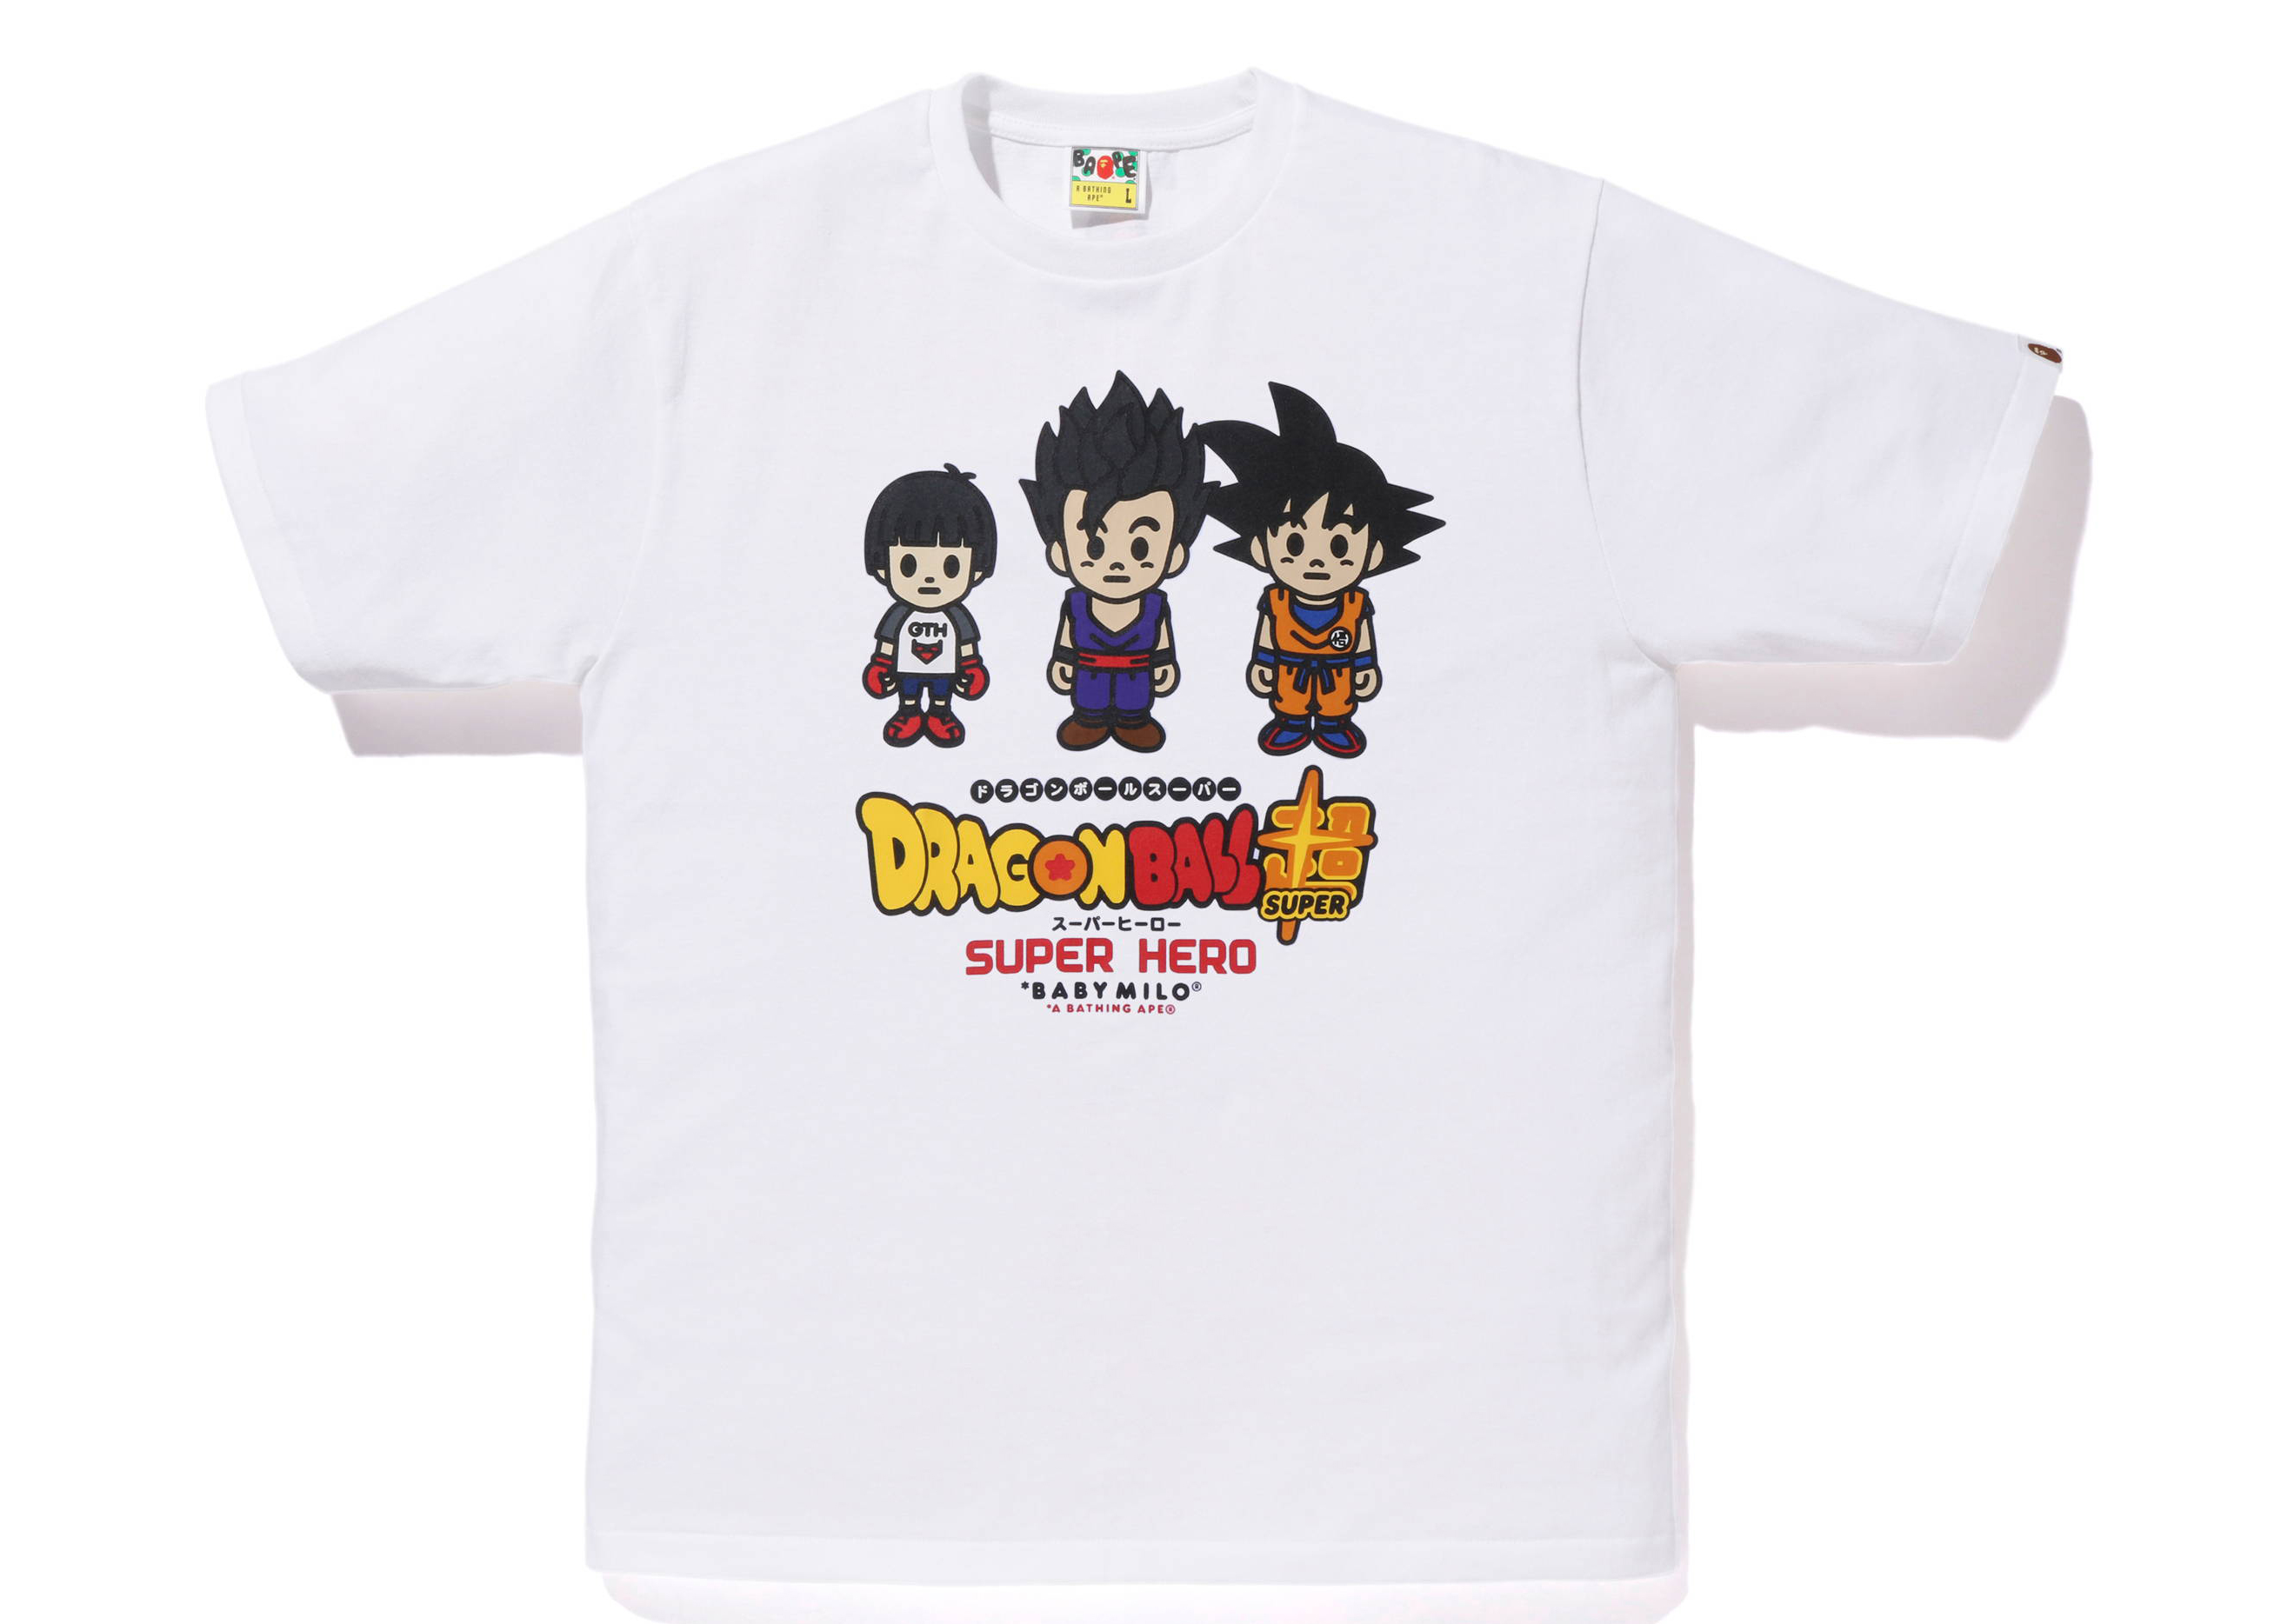 BAPE x Dragon Ball Super Pan & Son Gohan & Son Goku Baby Milo 